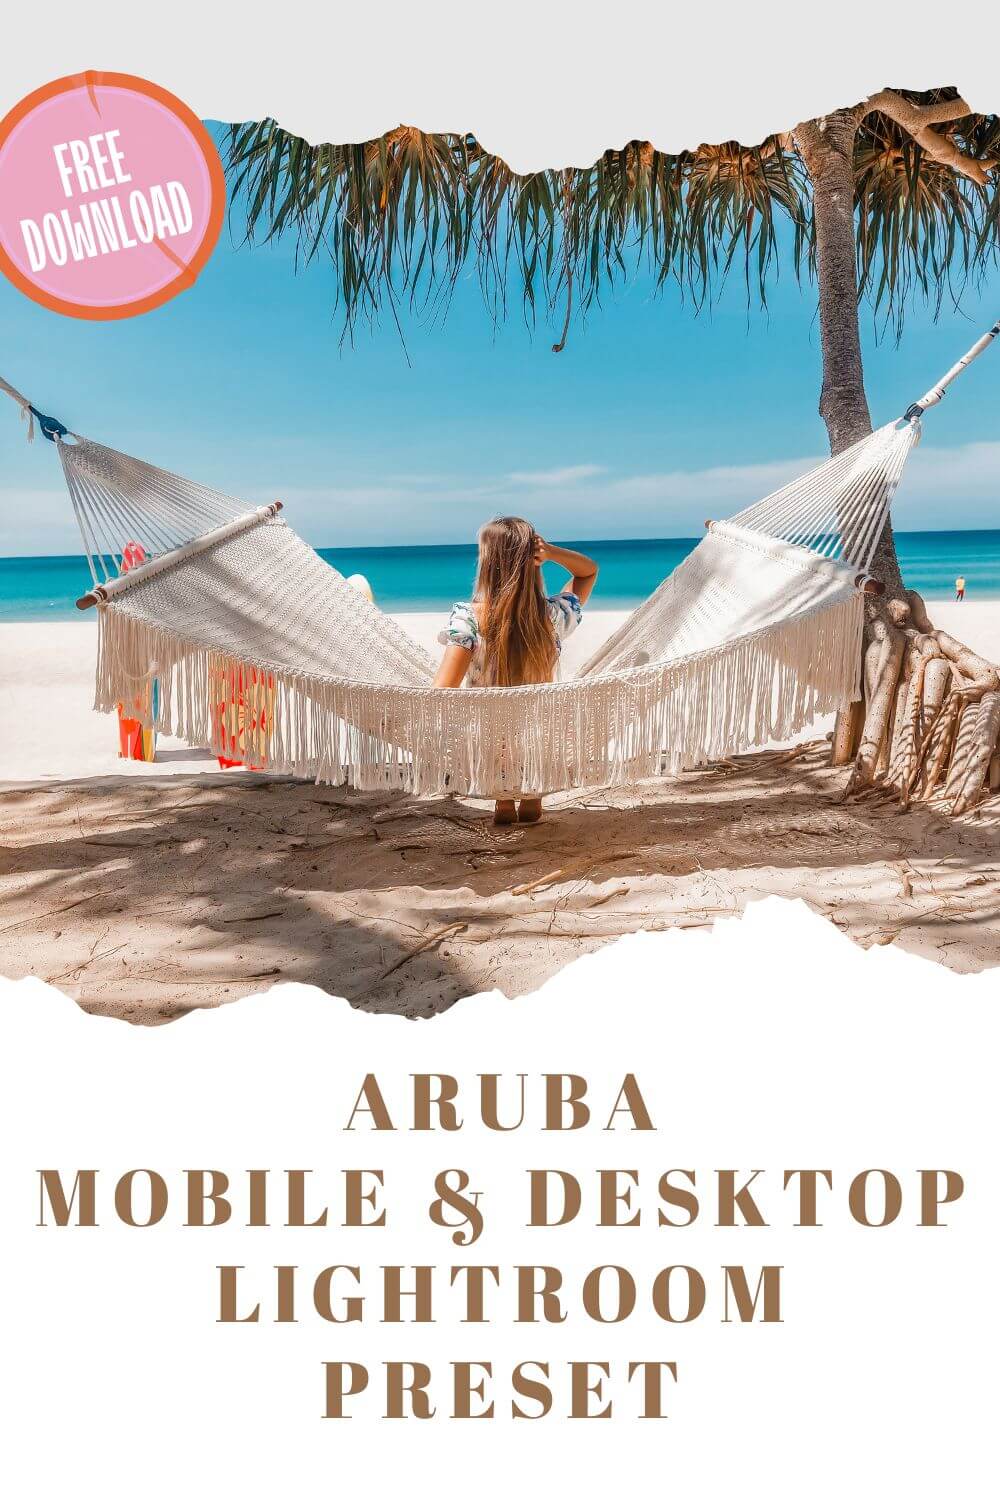 Aruba Mobile & Desktop Lightroom Preset Pinterest